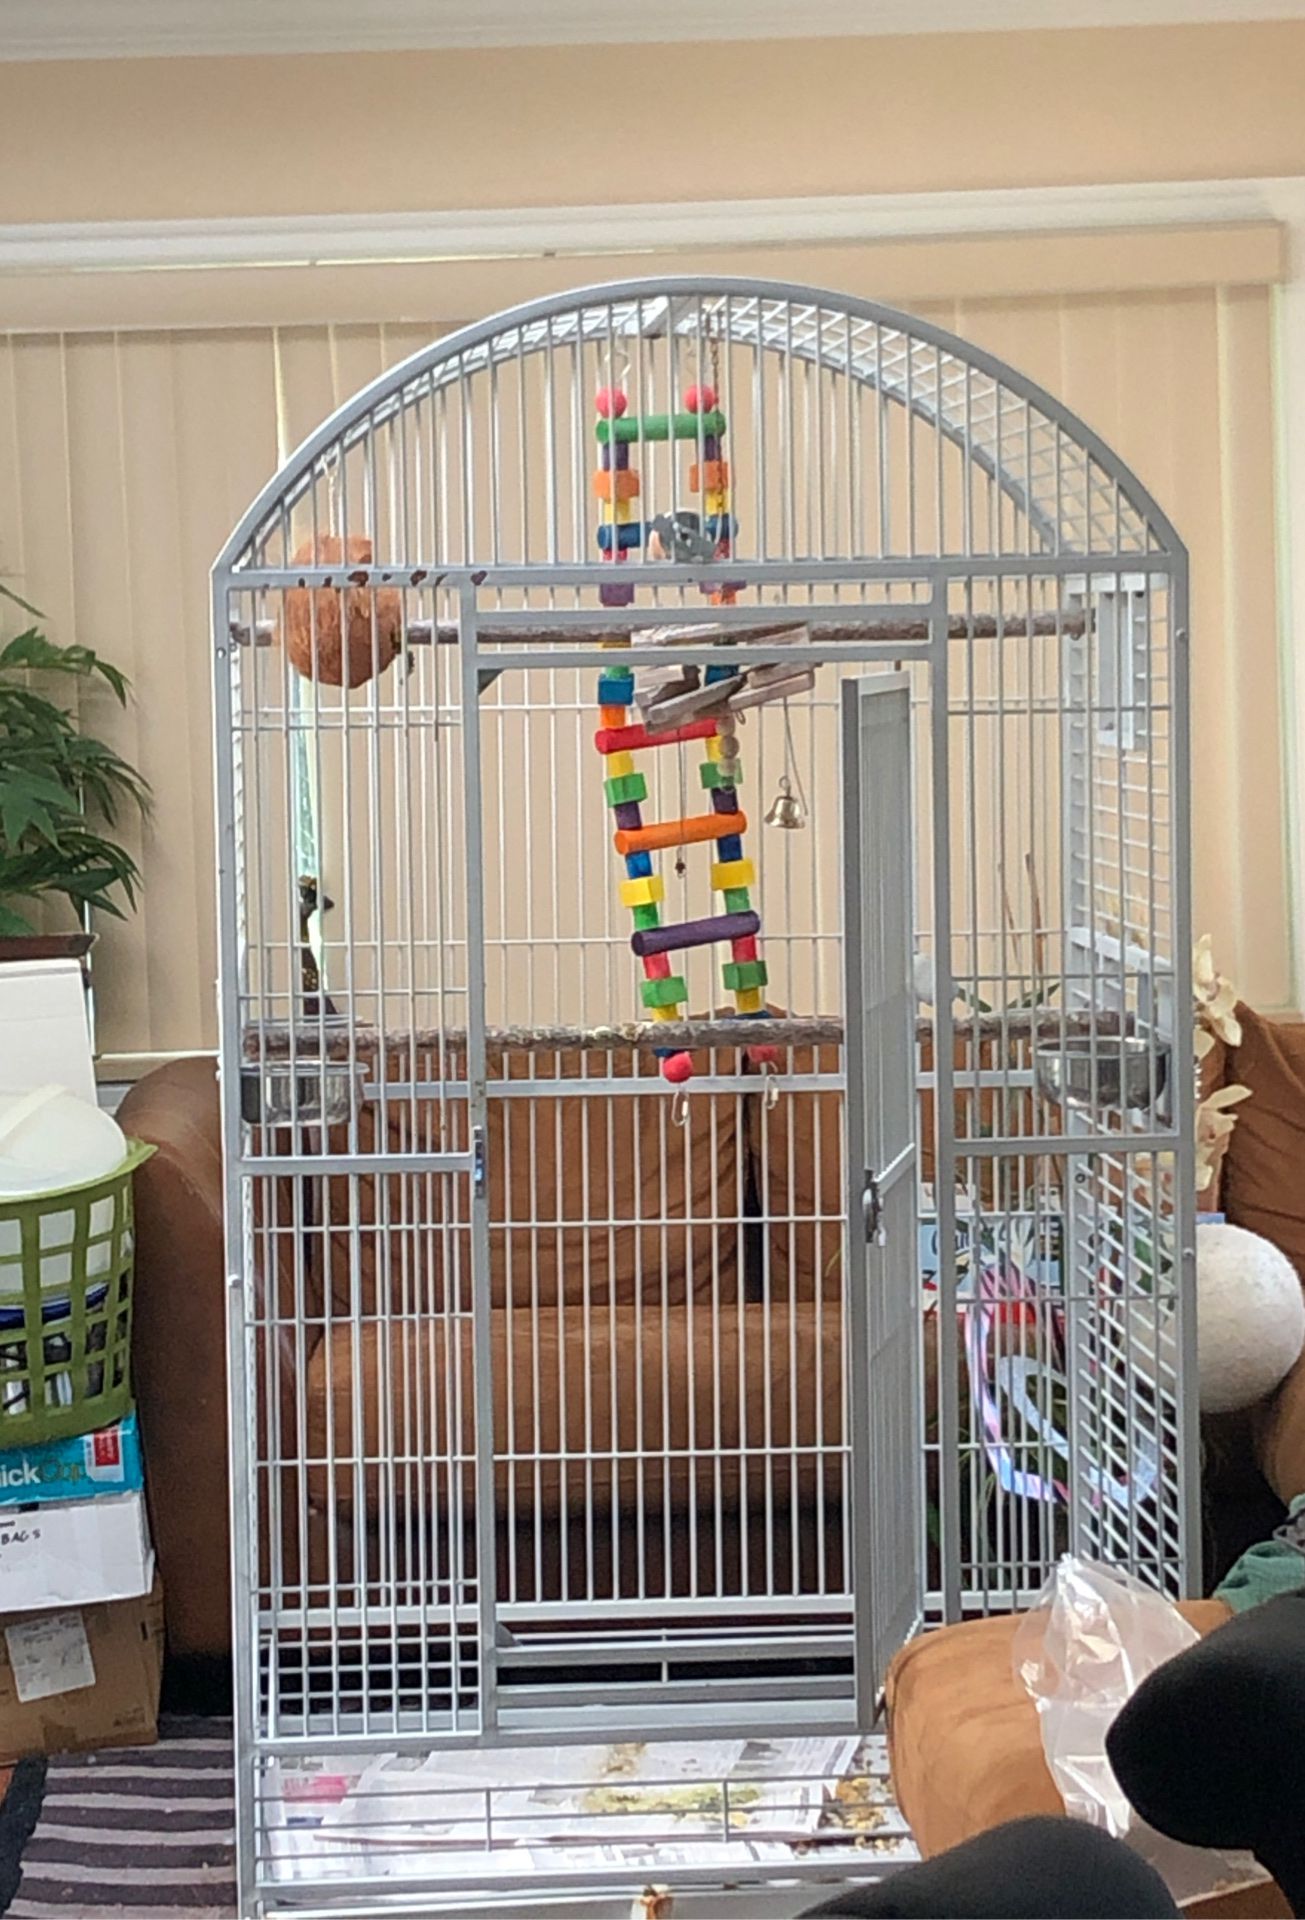 Large bird cage